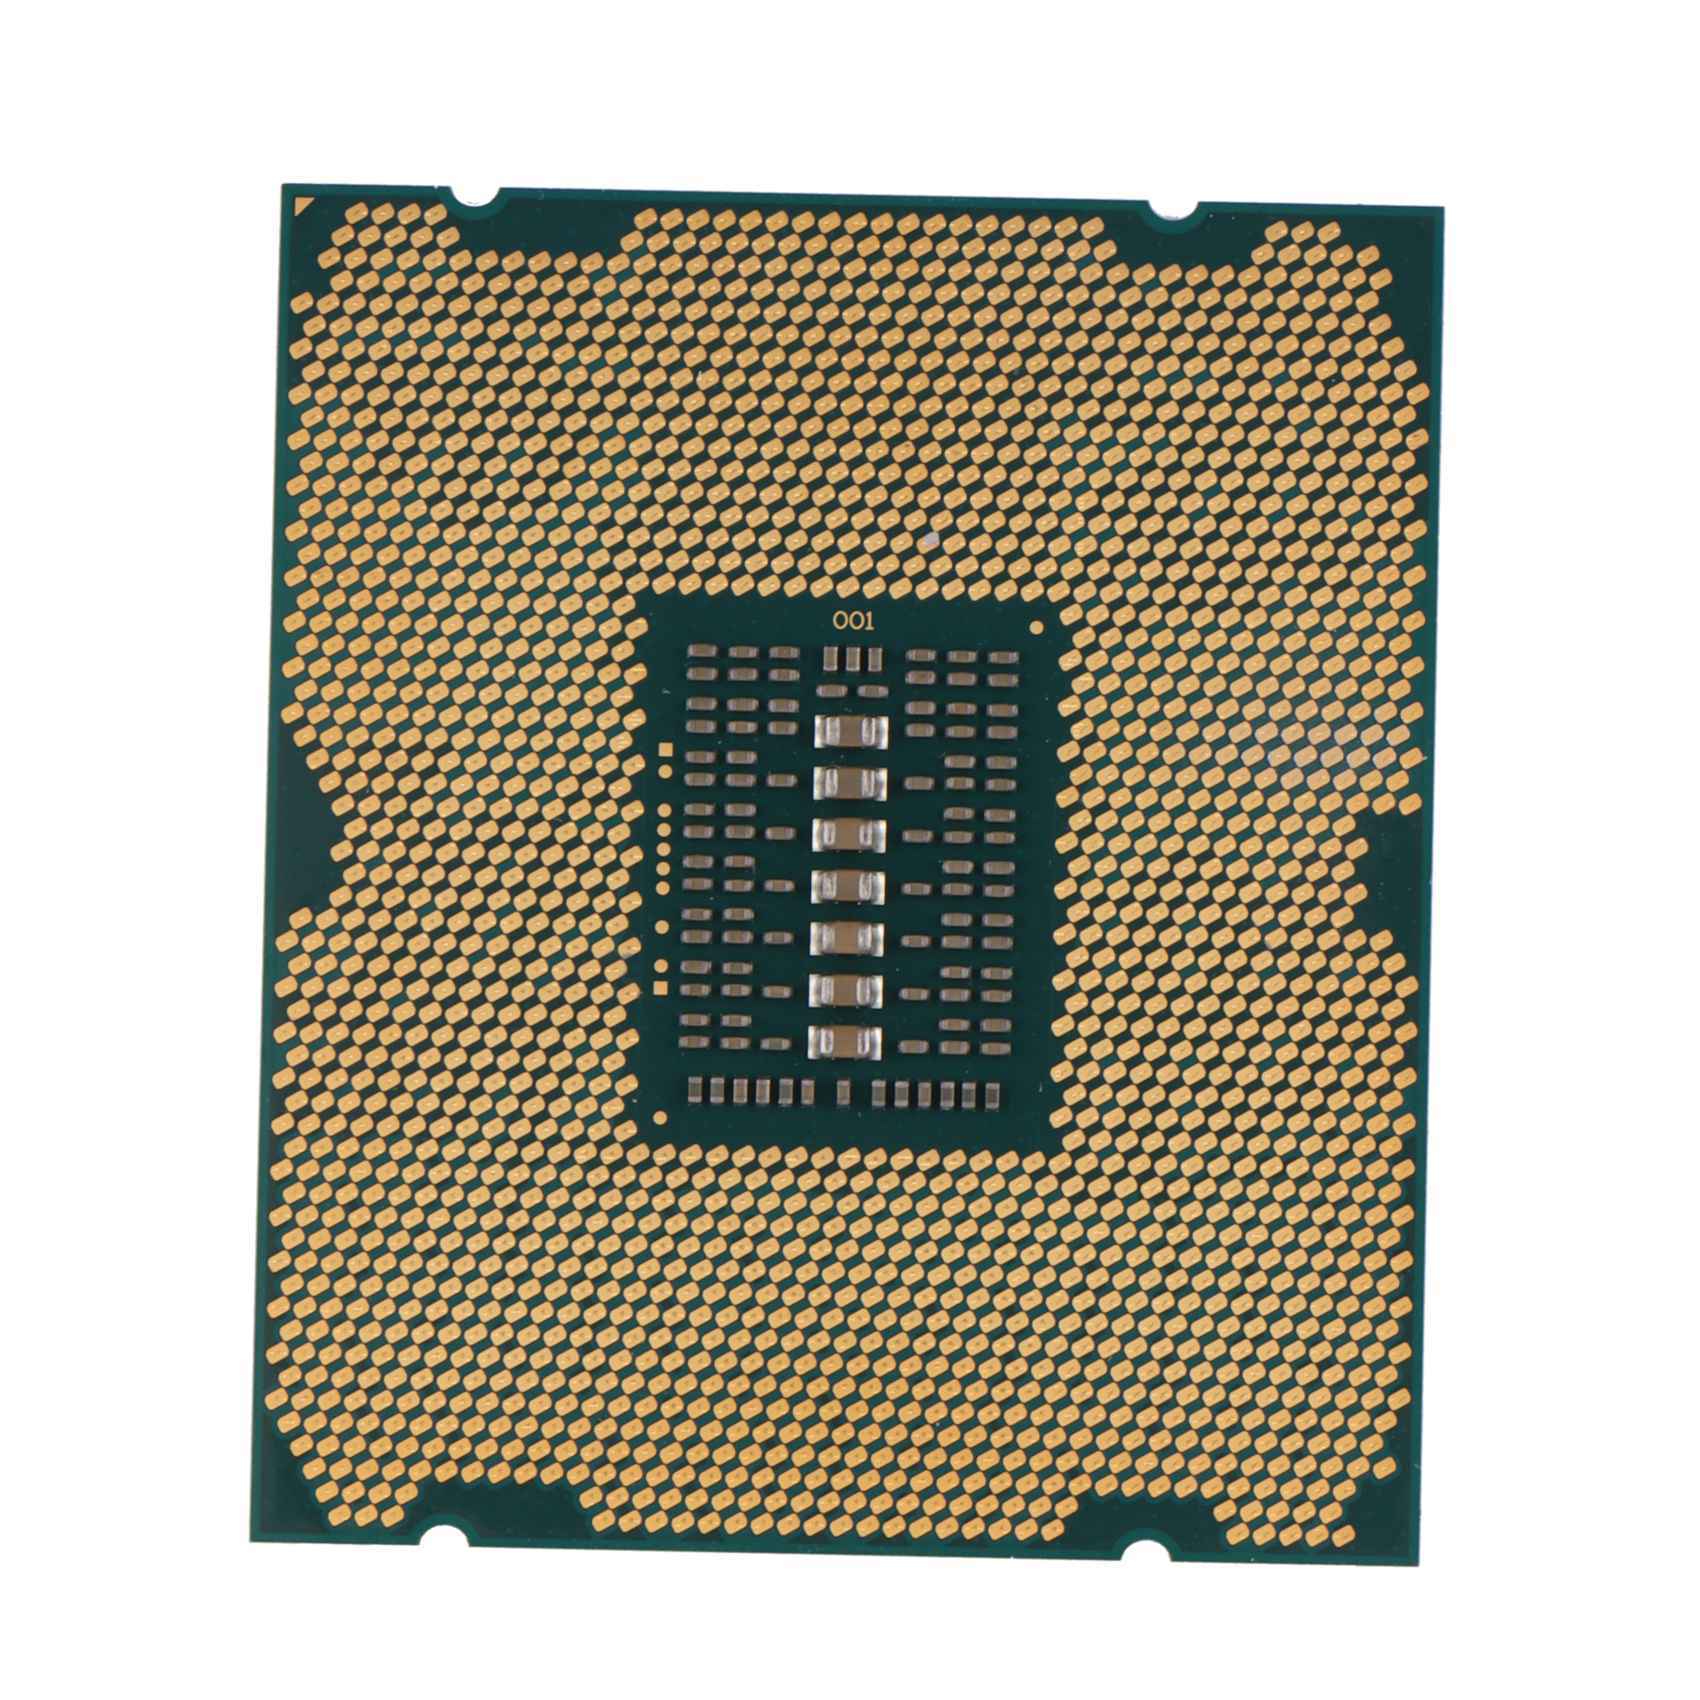 Cpu 16 cores. Intel Xeon e5-2630v2. Процессор Intel Xeon e5-1650v2. Процессор Intel Xeon e5-2620v2. E5 2630 v2.